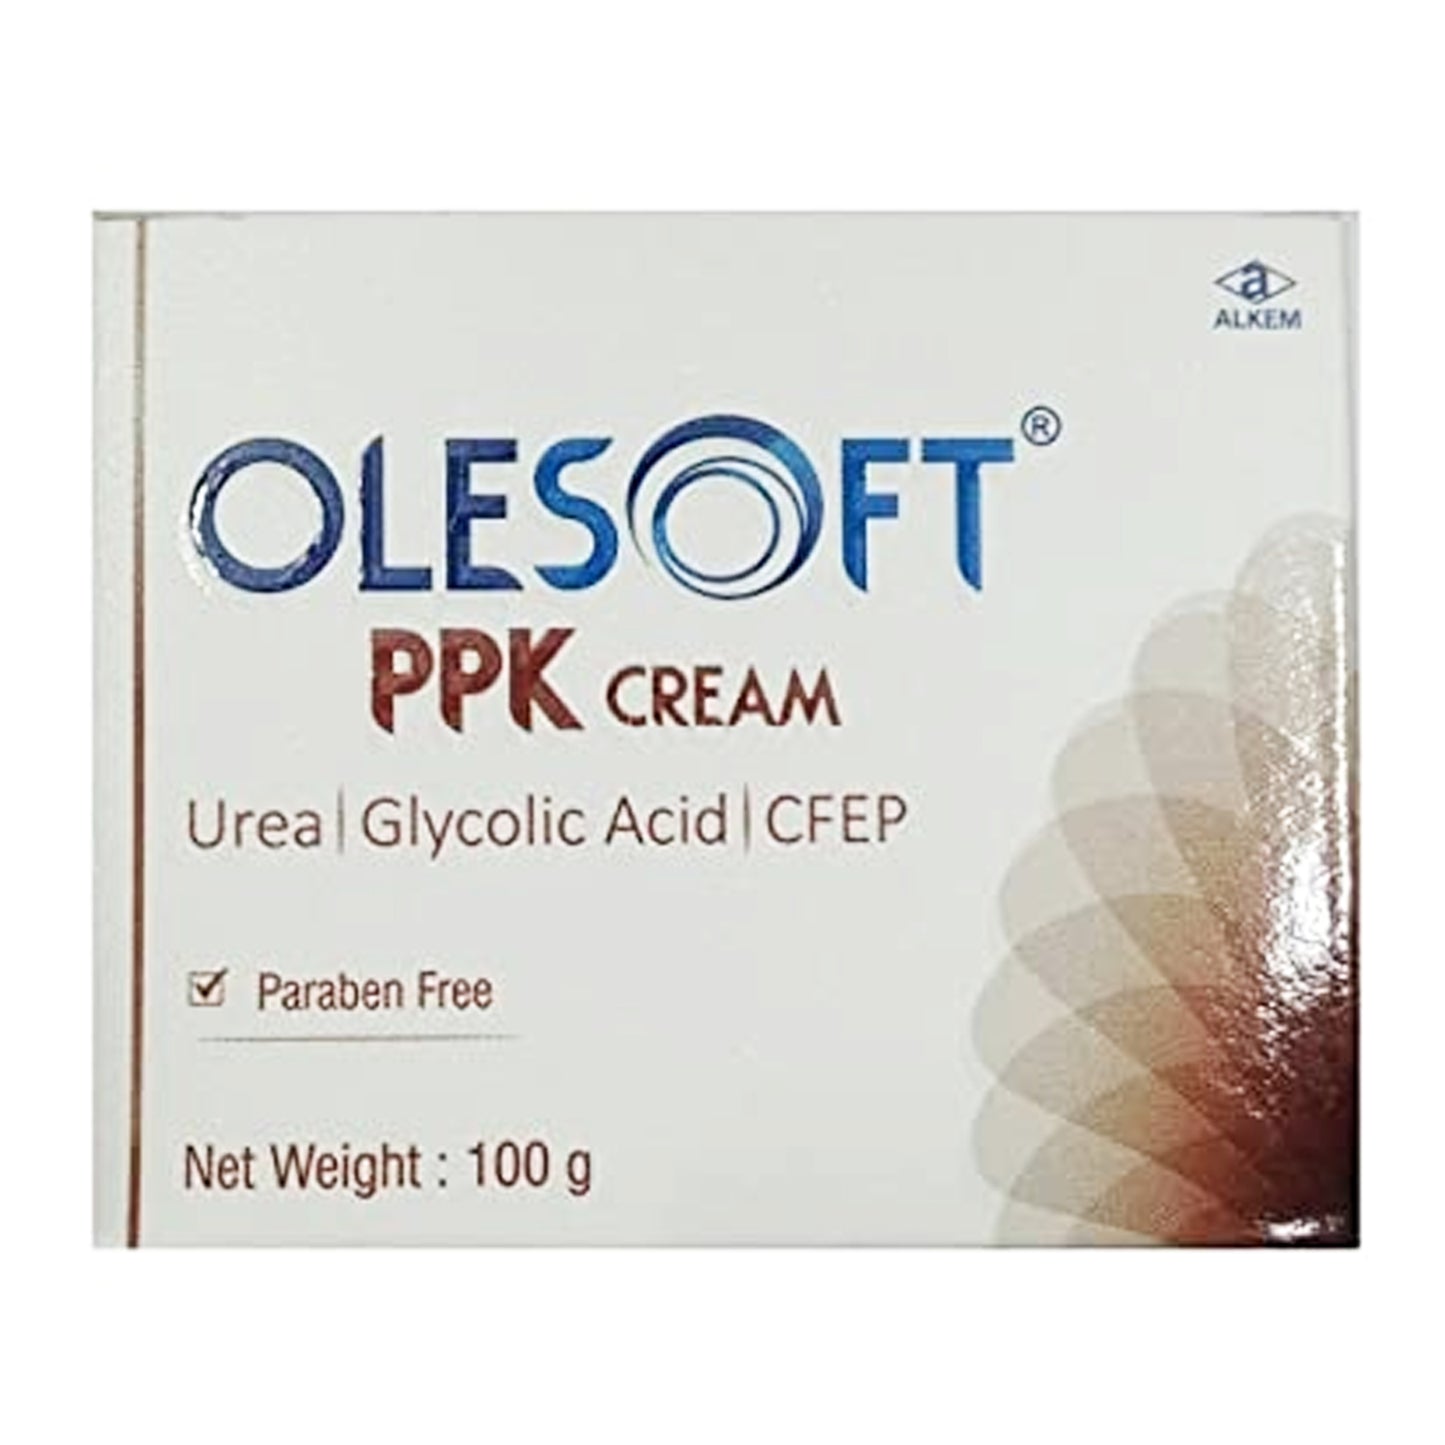 Olesoft PPK Cream, 100gm